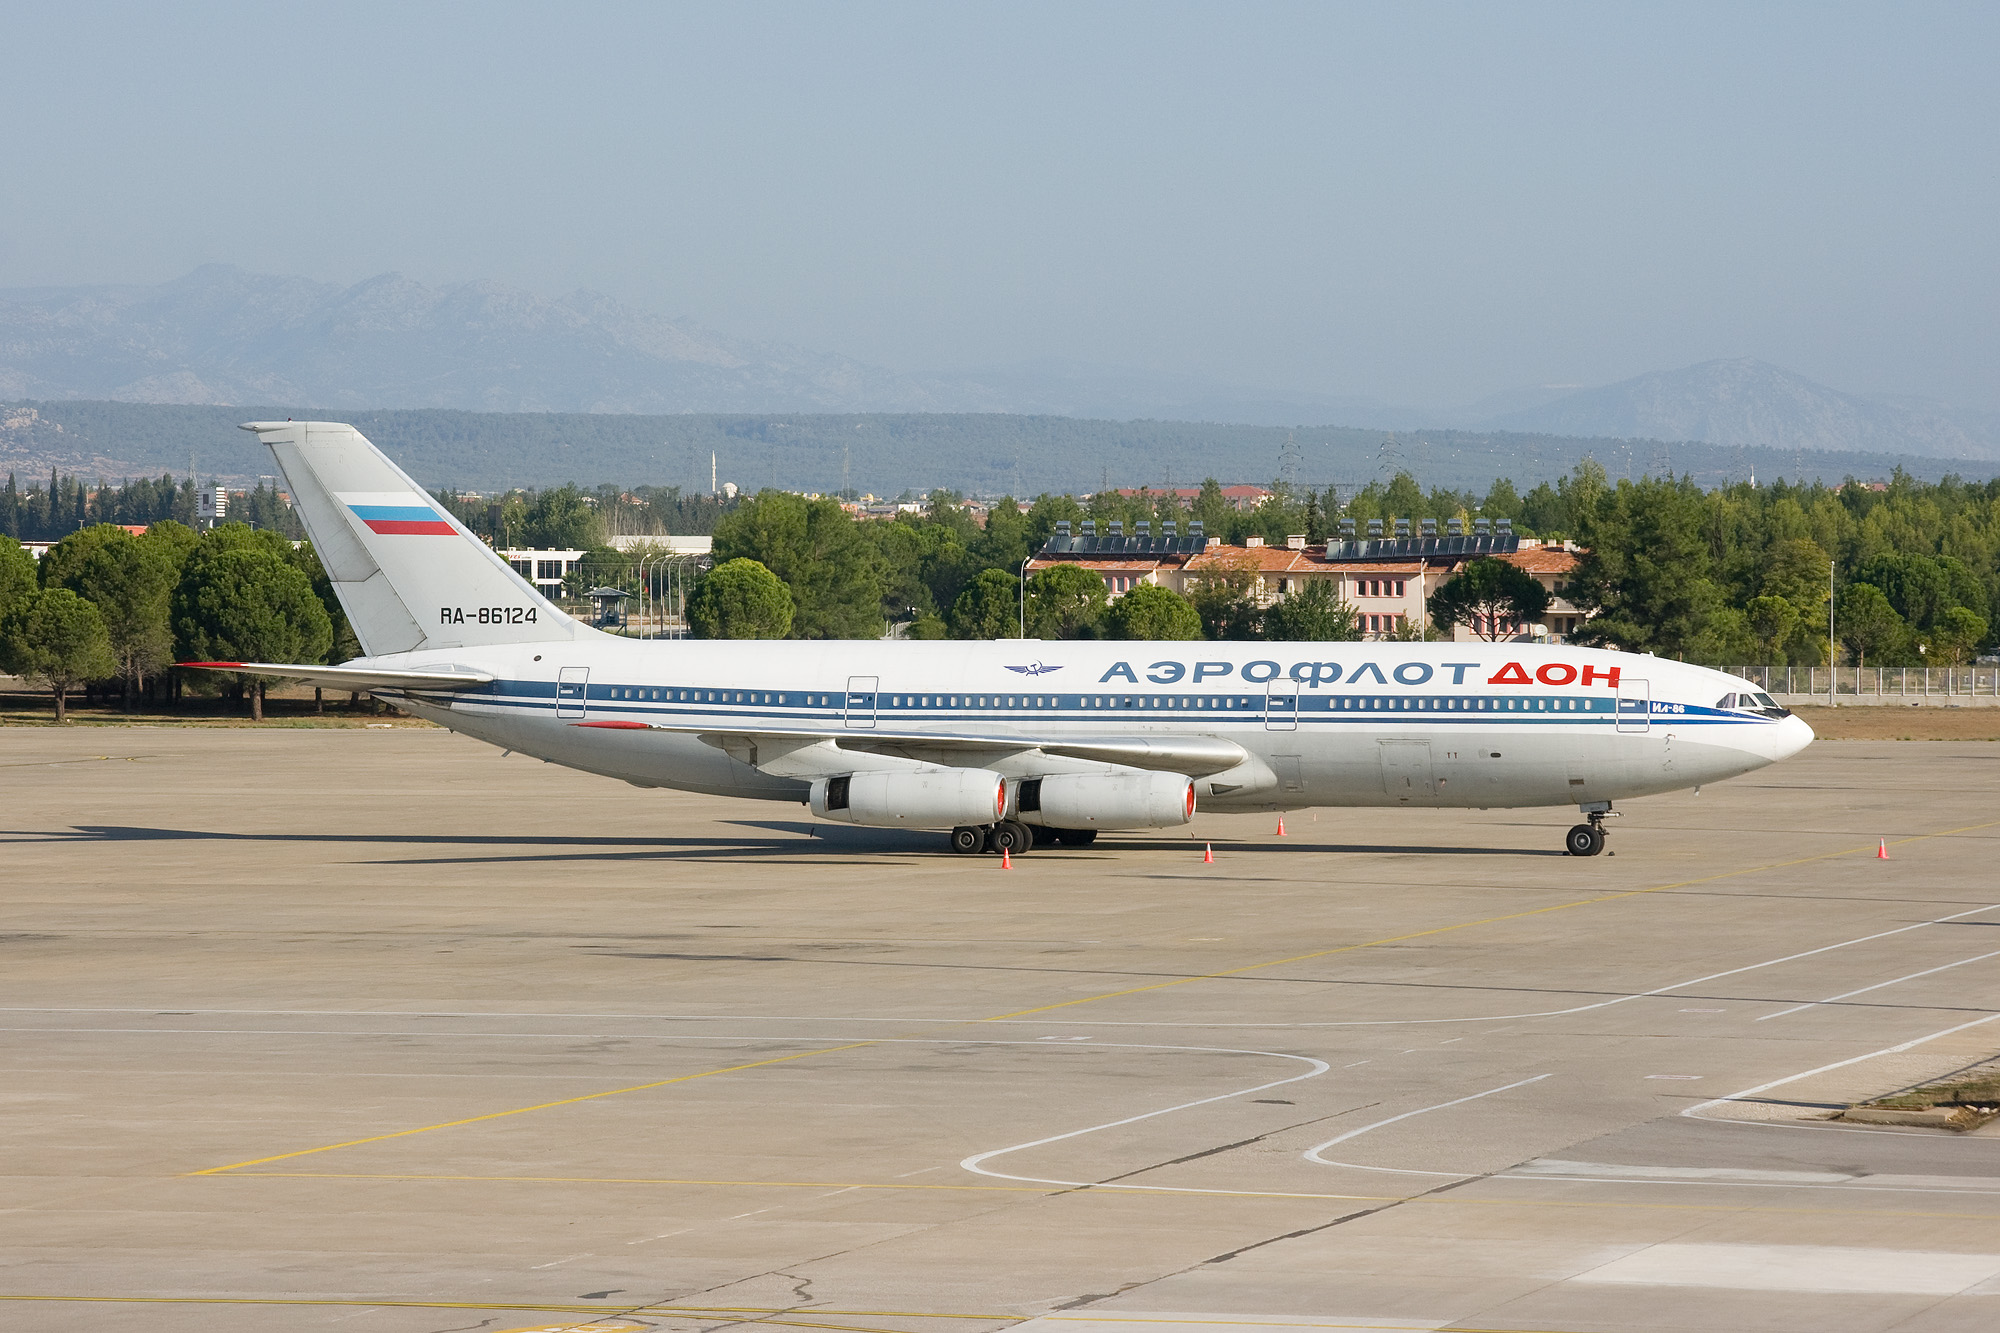 Ilyushin Il-86 next